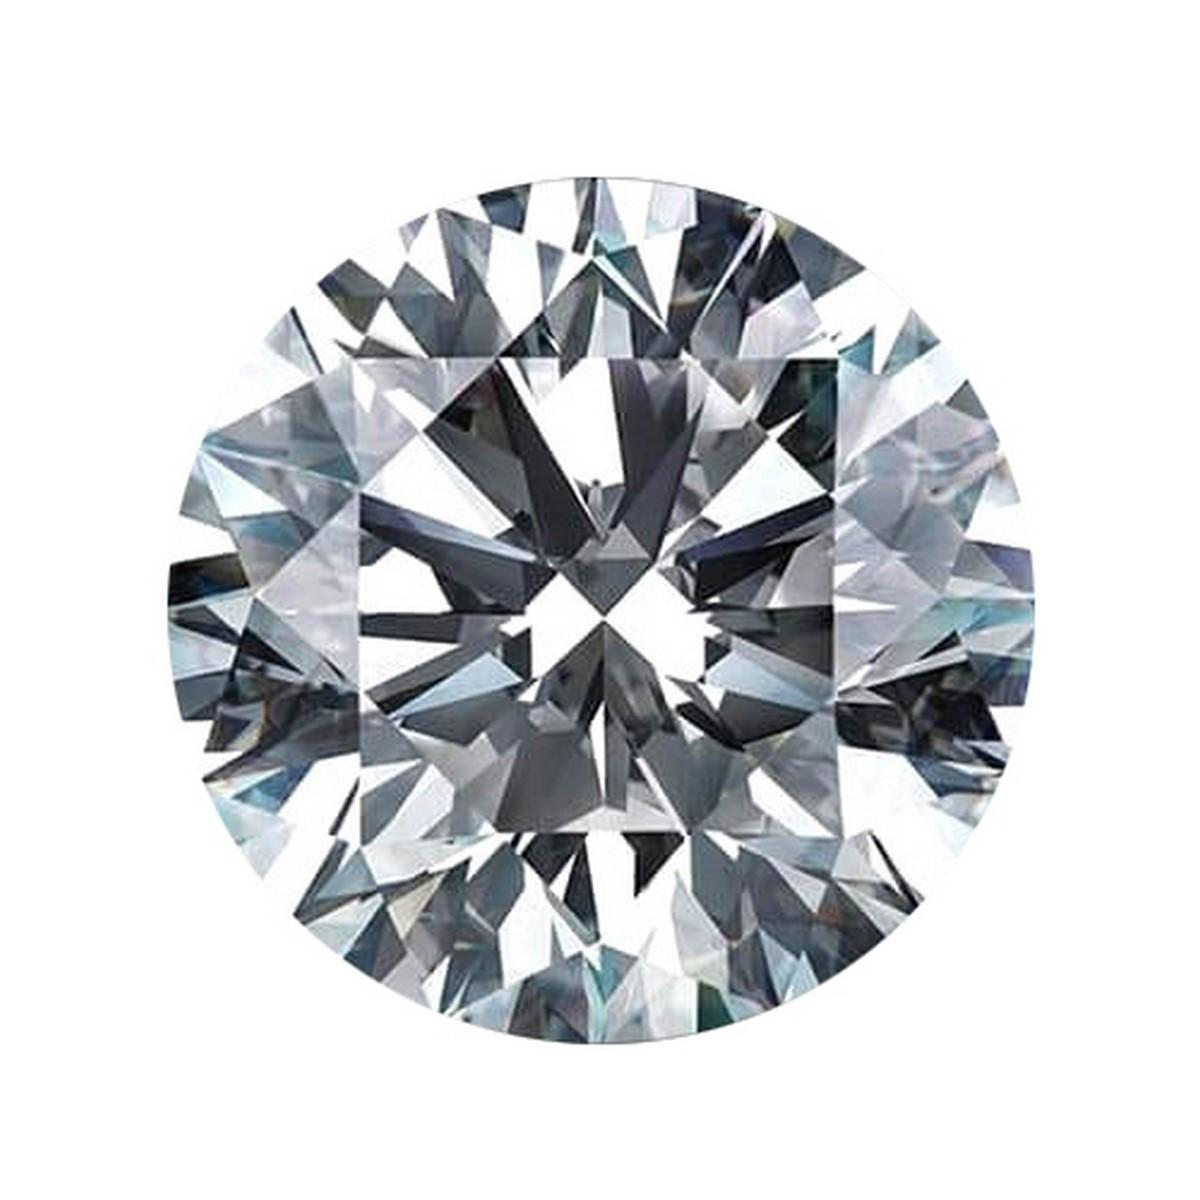 1.62 ctw. VVS2 IGI Certified Round Brilliant Cut Loose Diamond (LAB GROWN)